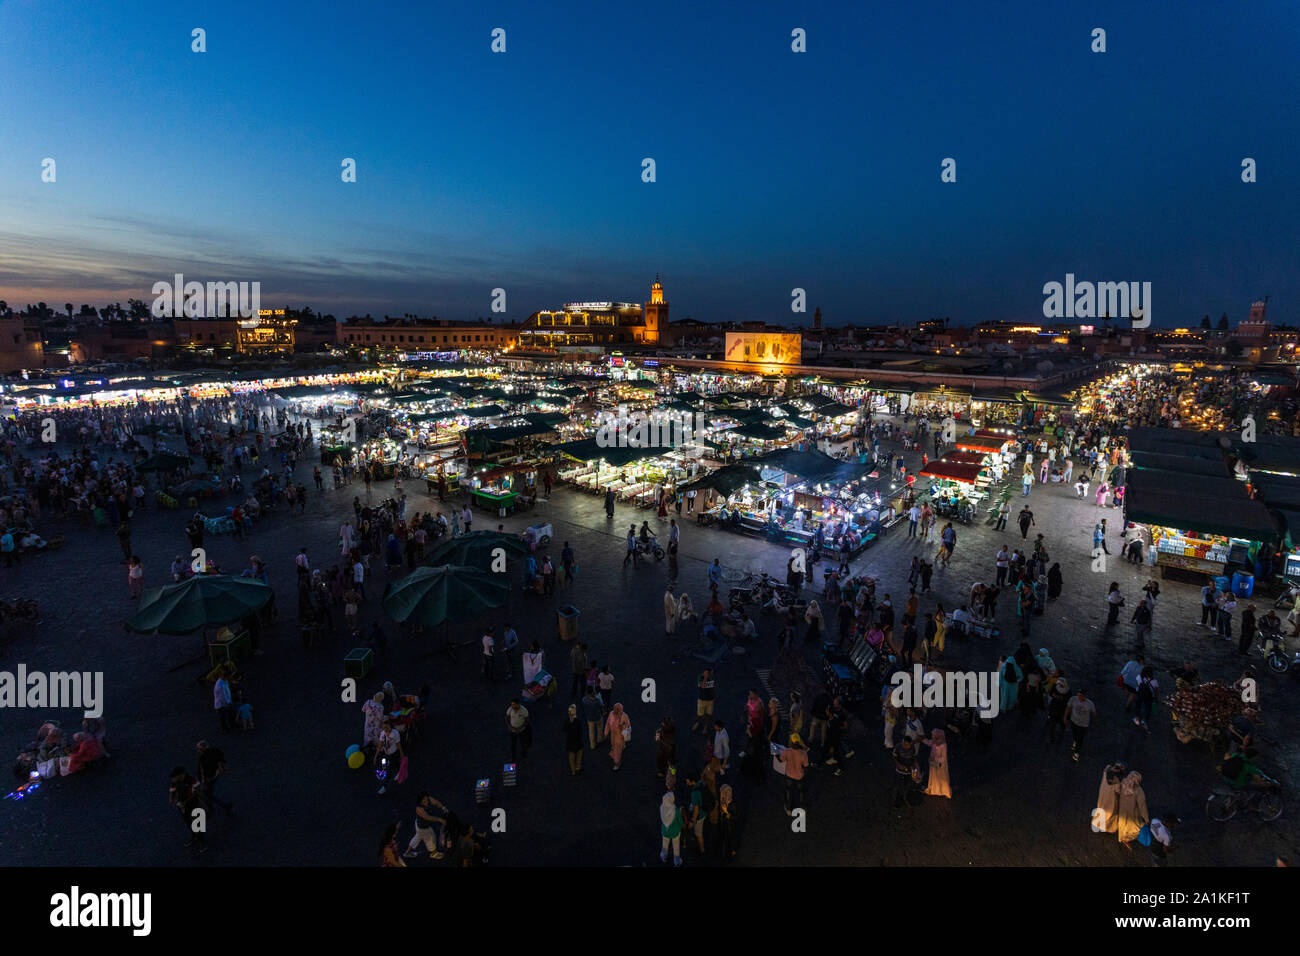 Chioschi in piazza Jemaa el Fna al crepuscolo, Marrakech, Marocco, Africa del Nord Foto Stock